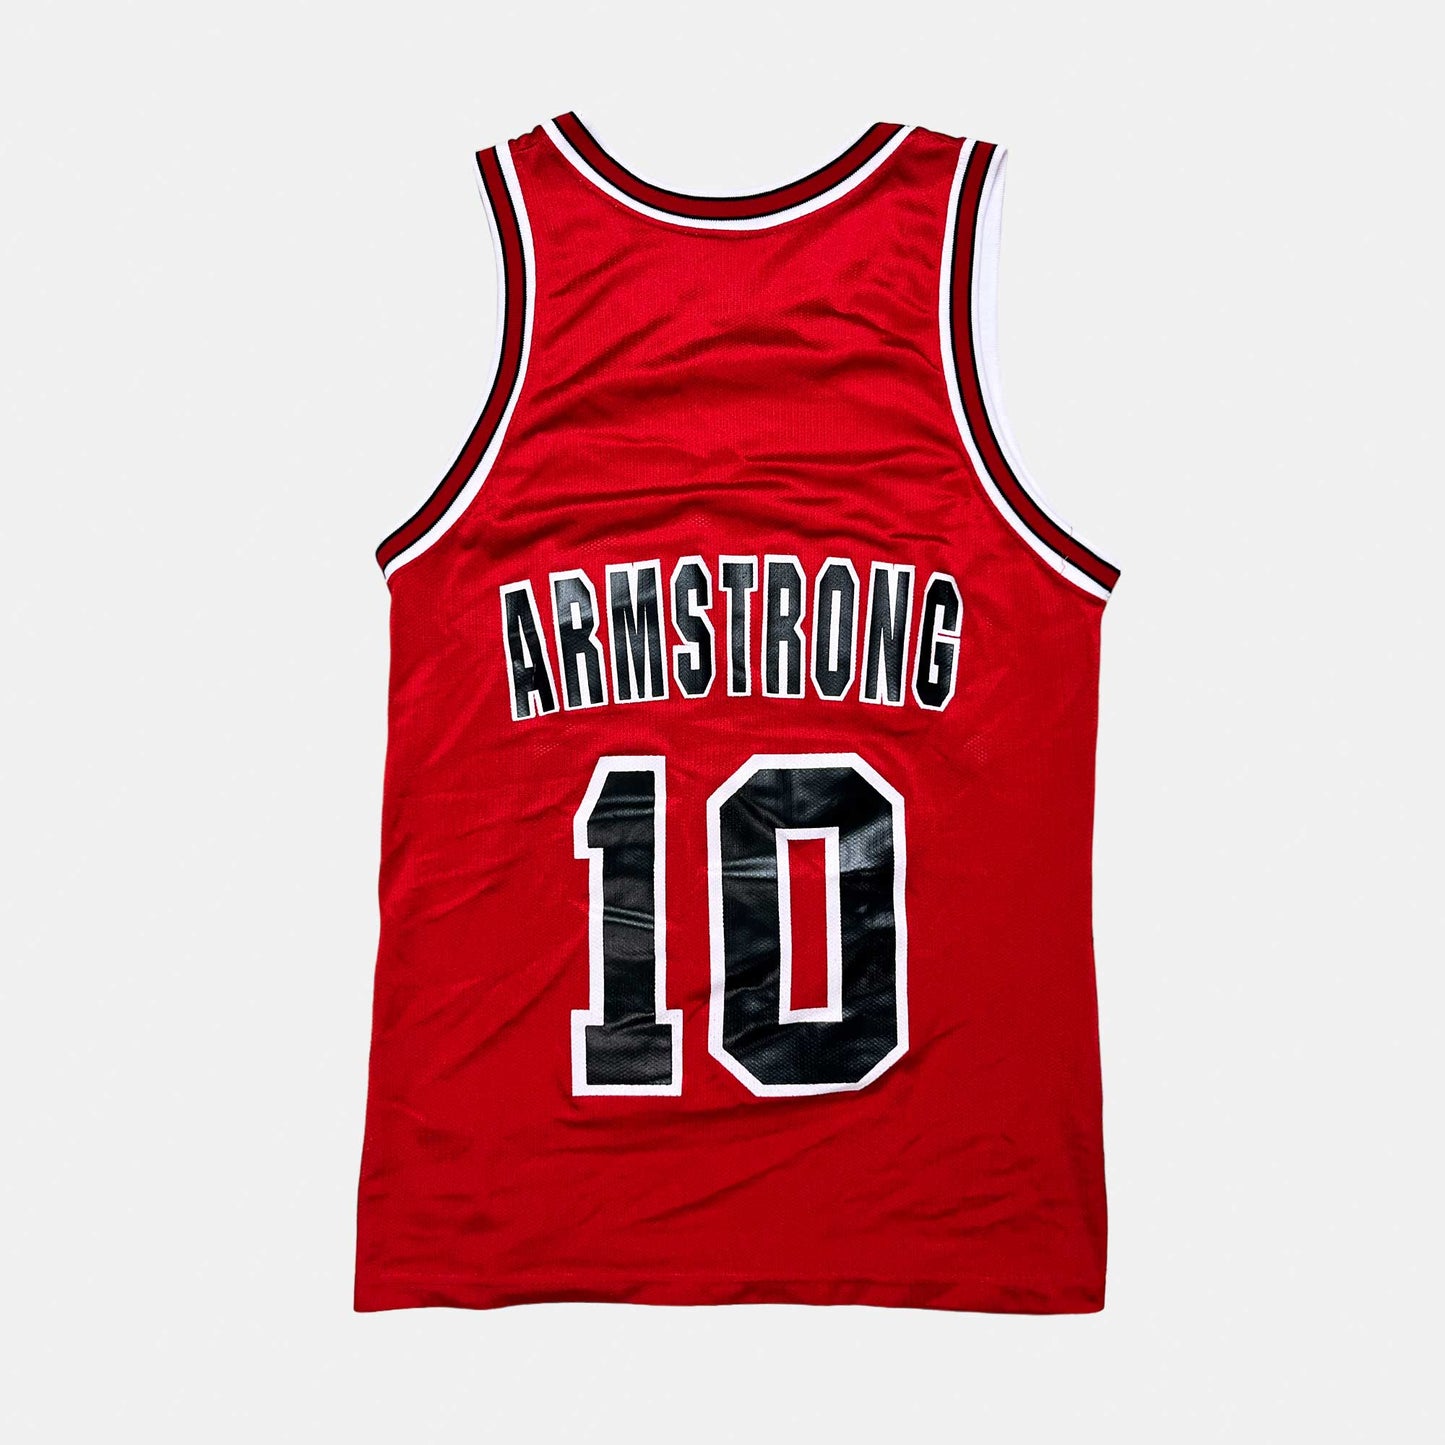 Chicago Bulls - BJ Armstrong - Größe 36 / S - Champion - NBA Trikot